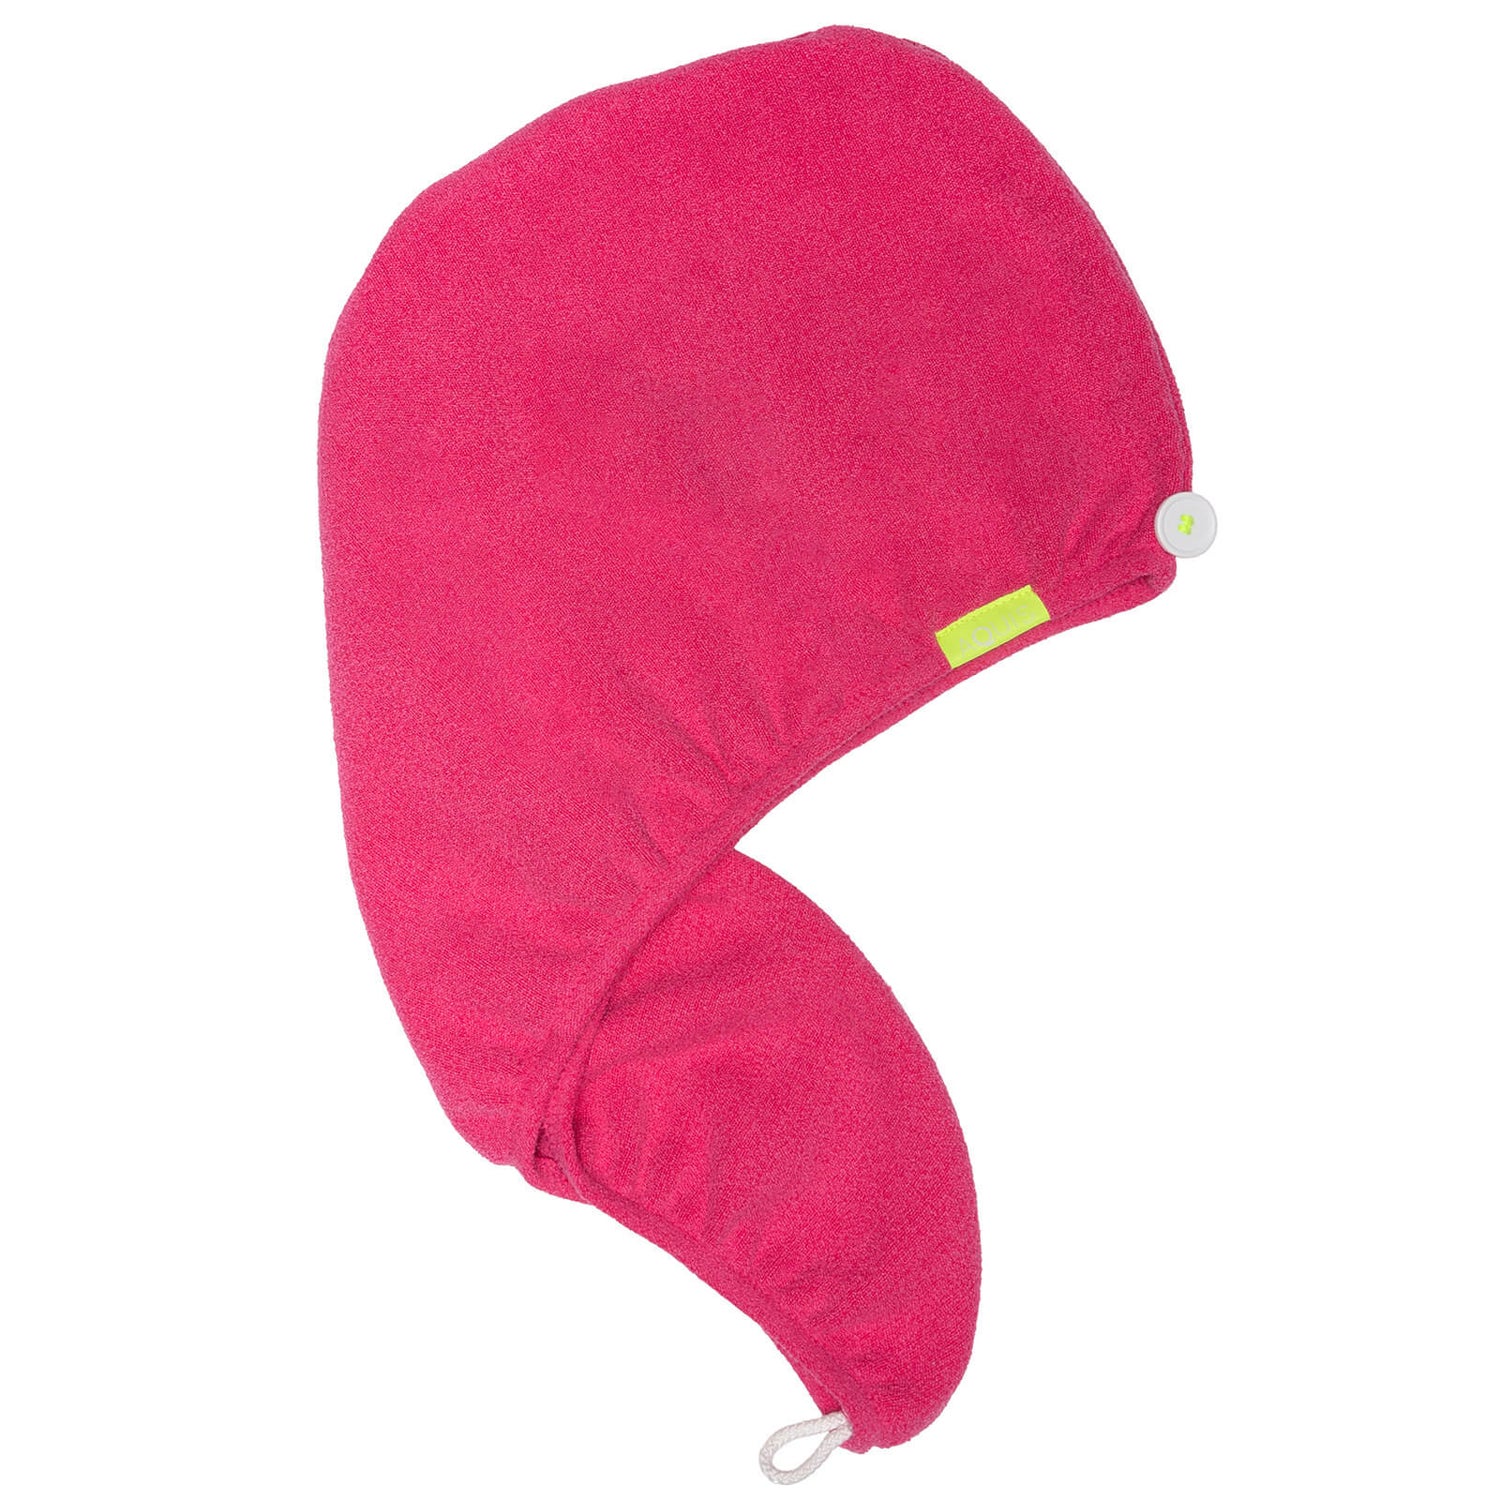 Aquis AON Turban - Hot pink